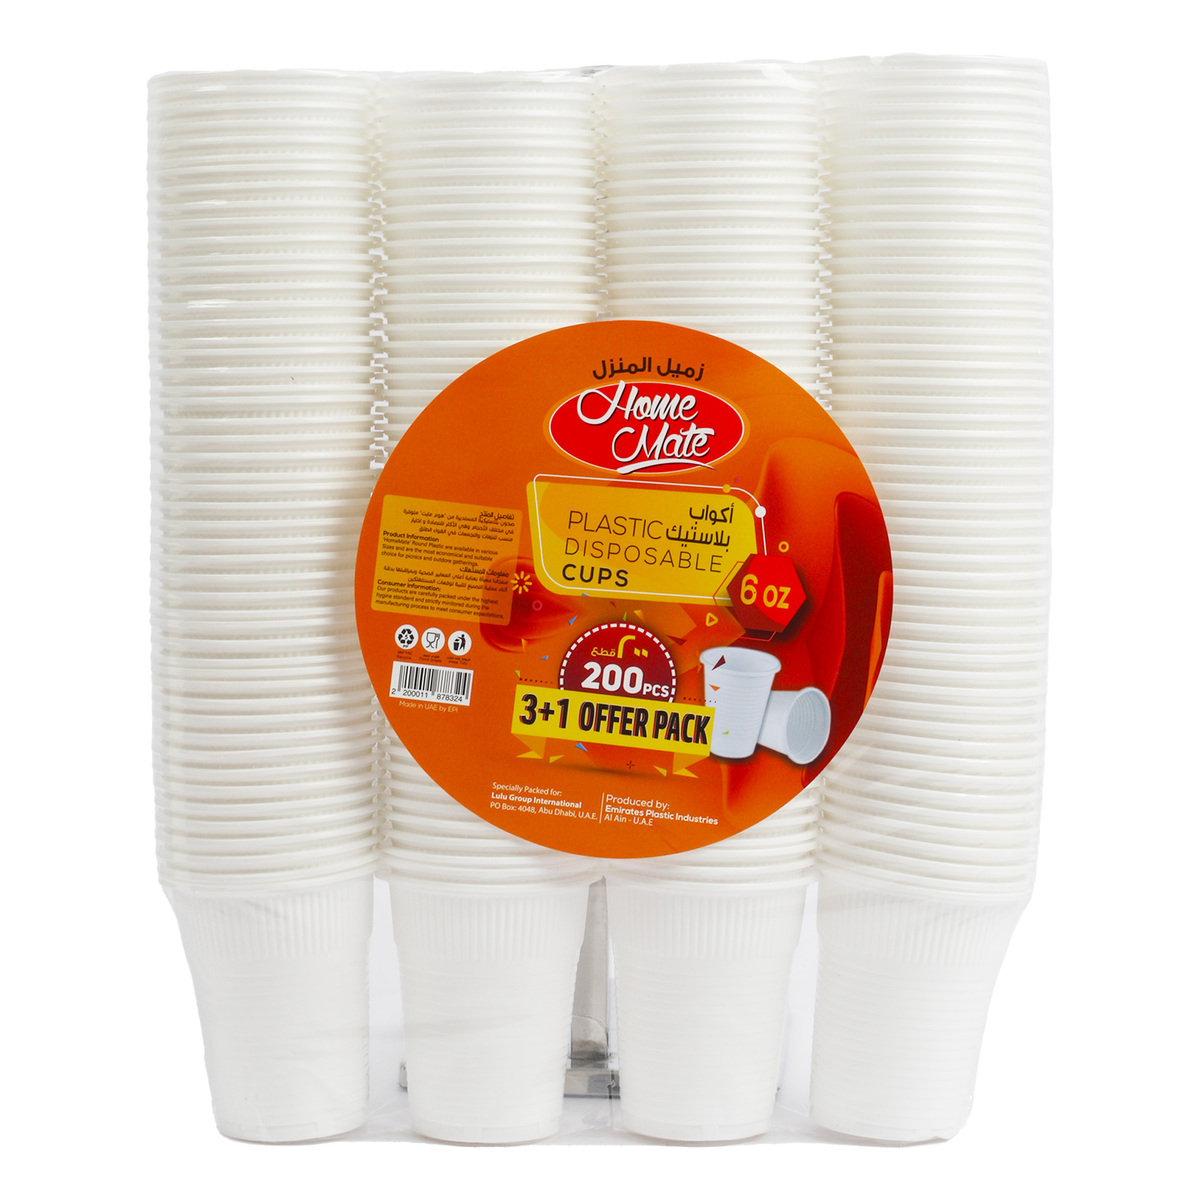 Home Mate Plastic Cups 6 oz 50 pcs 3 + 1